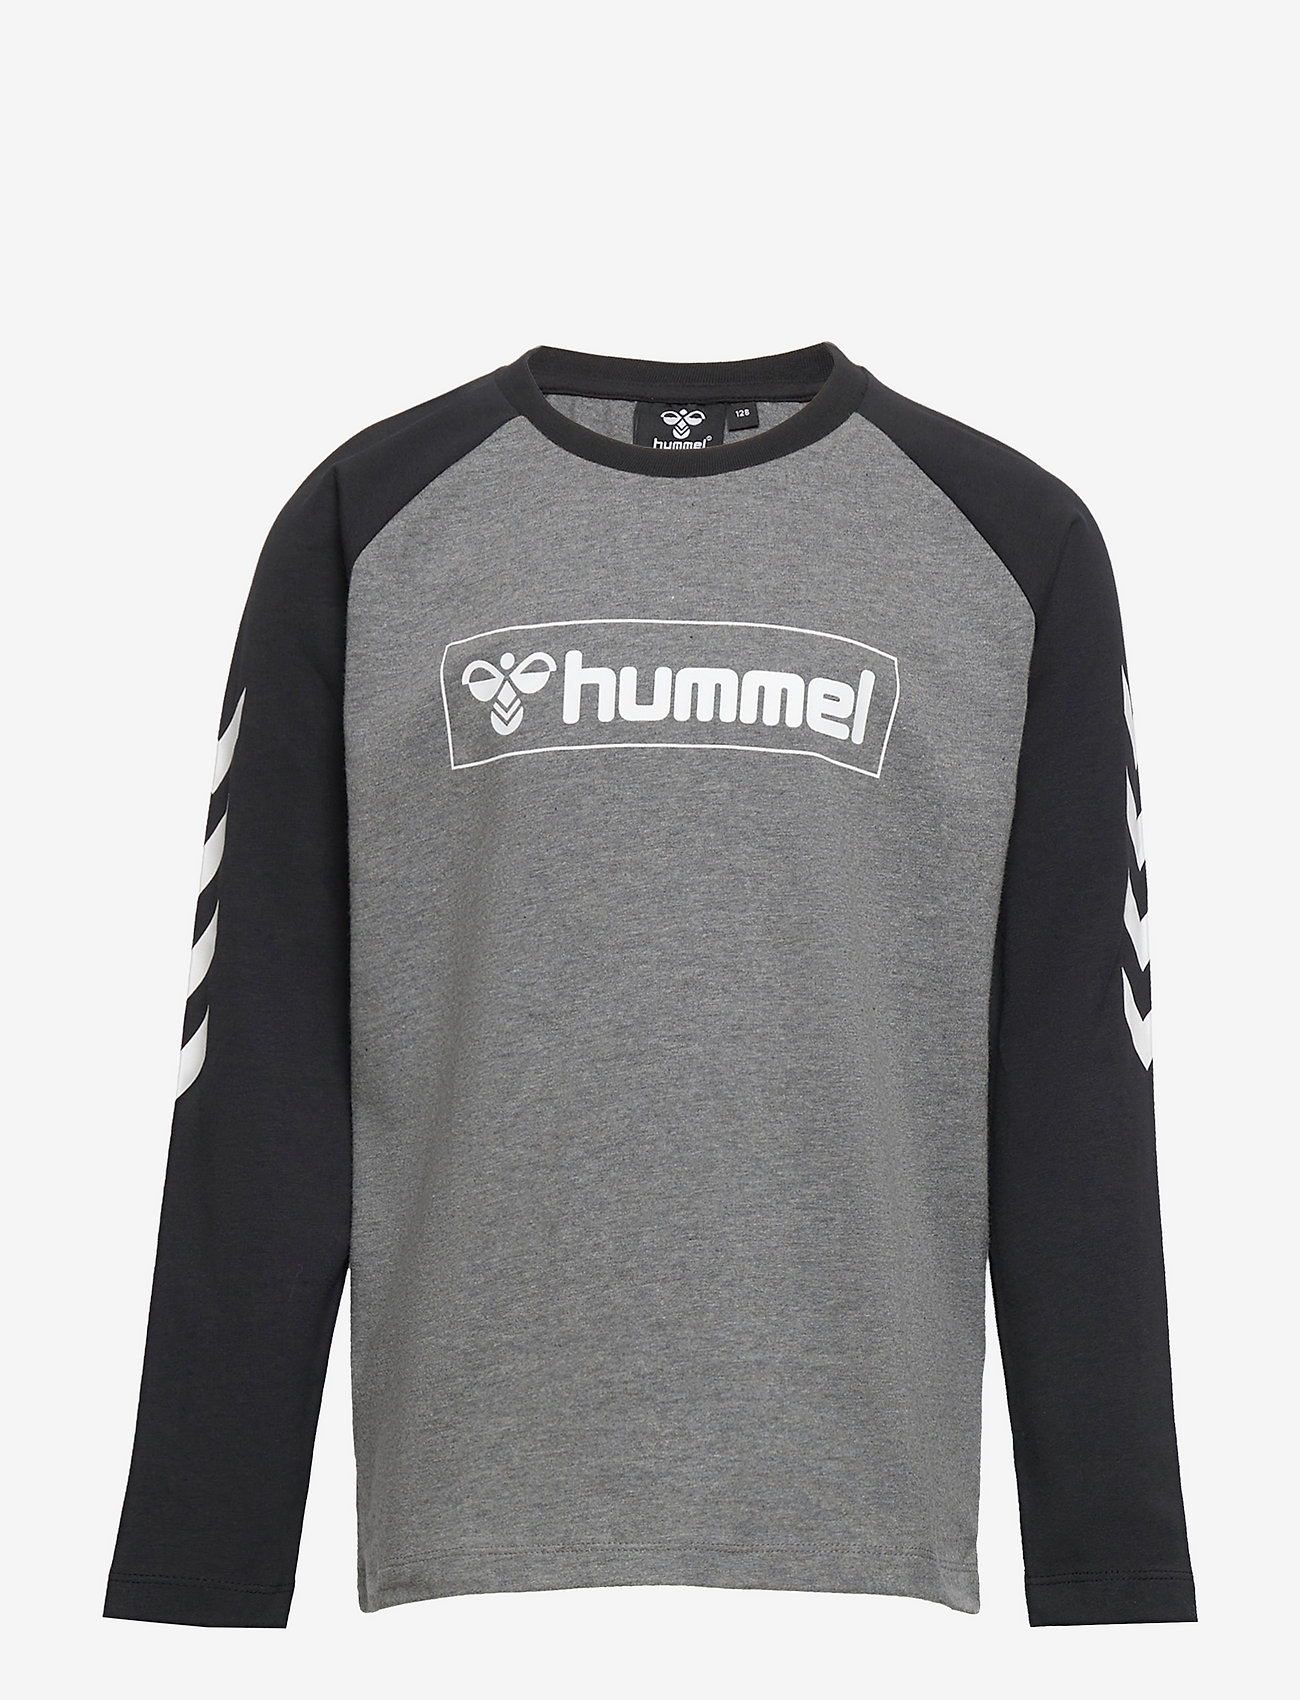 Hummel - hmlBOX T-SHIRT L/S - pitkähihaiset paidat - medium melange - 0